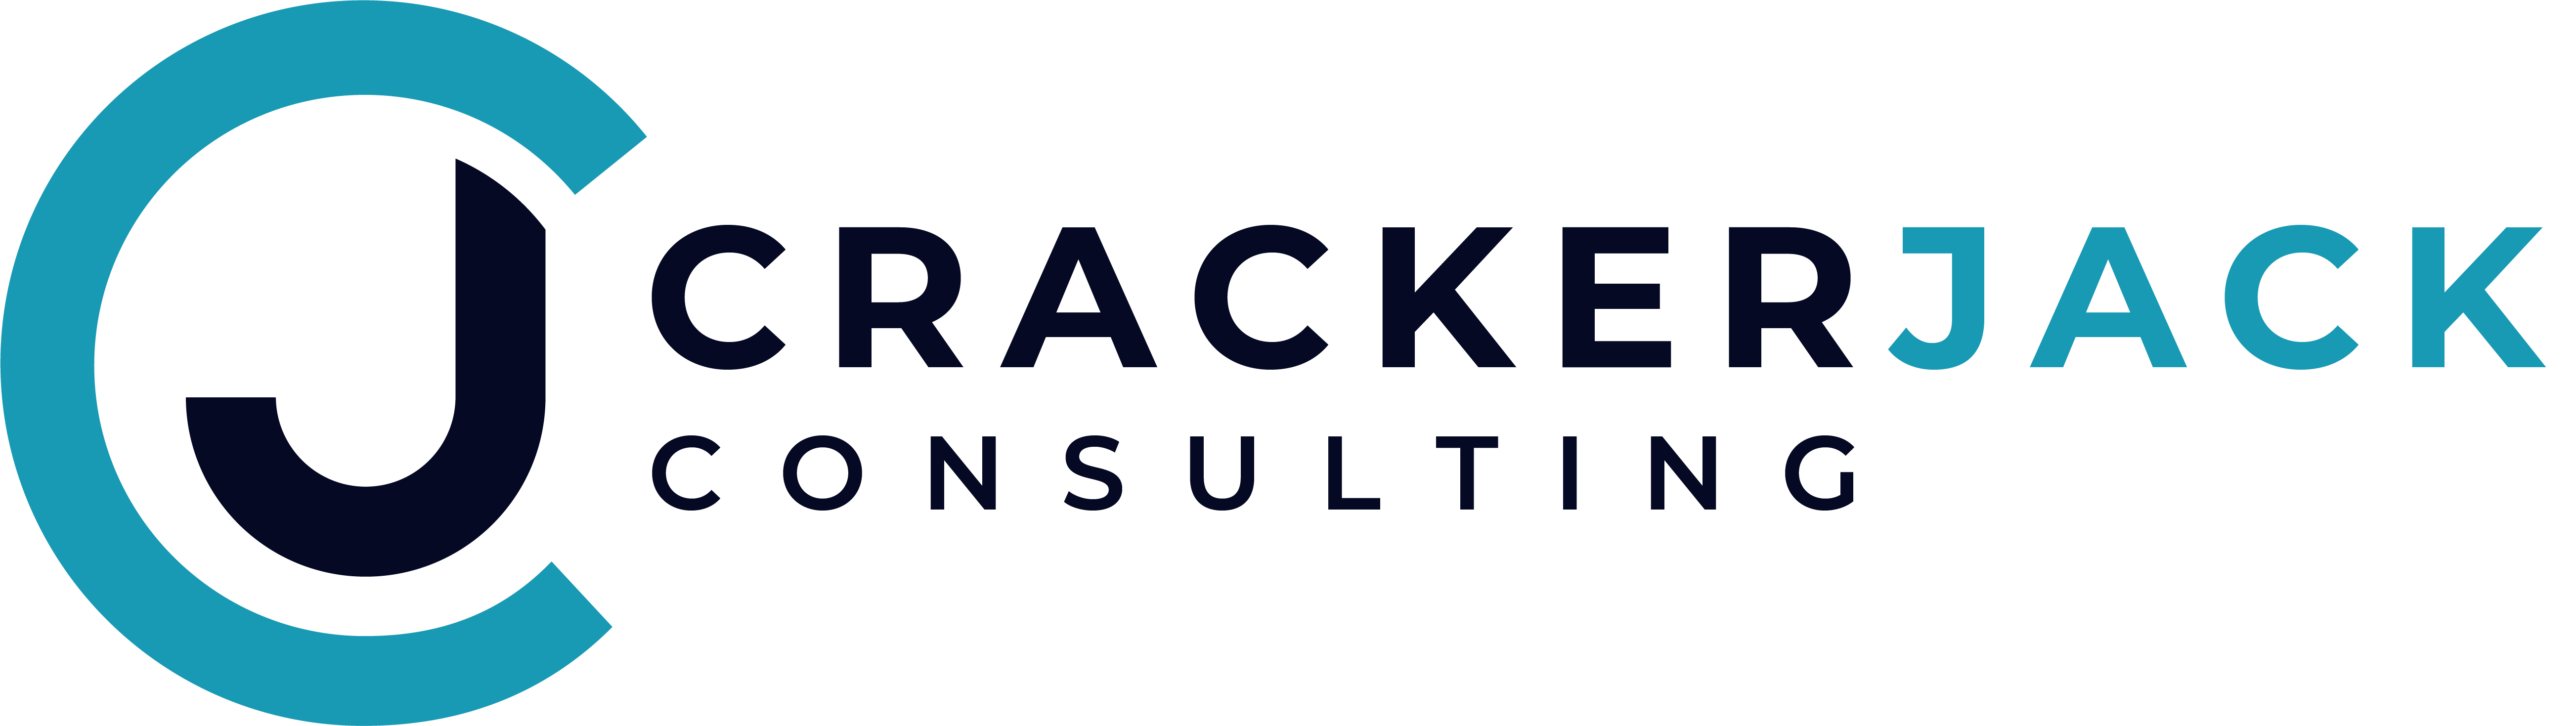 Crackerjack Consulting Engineers